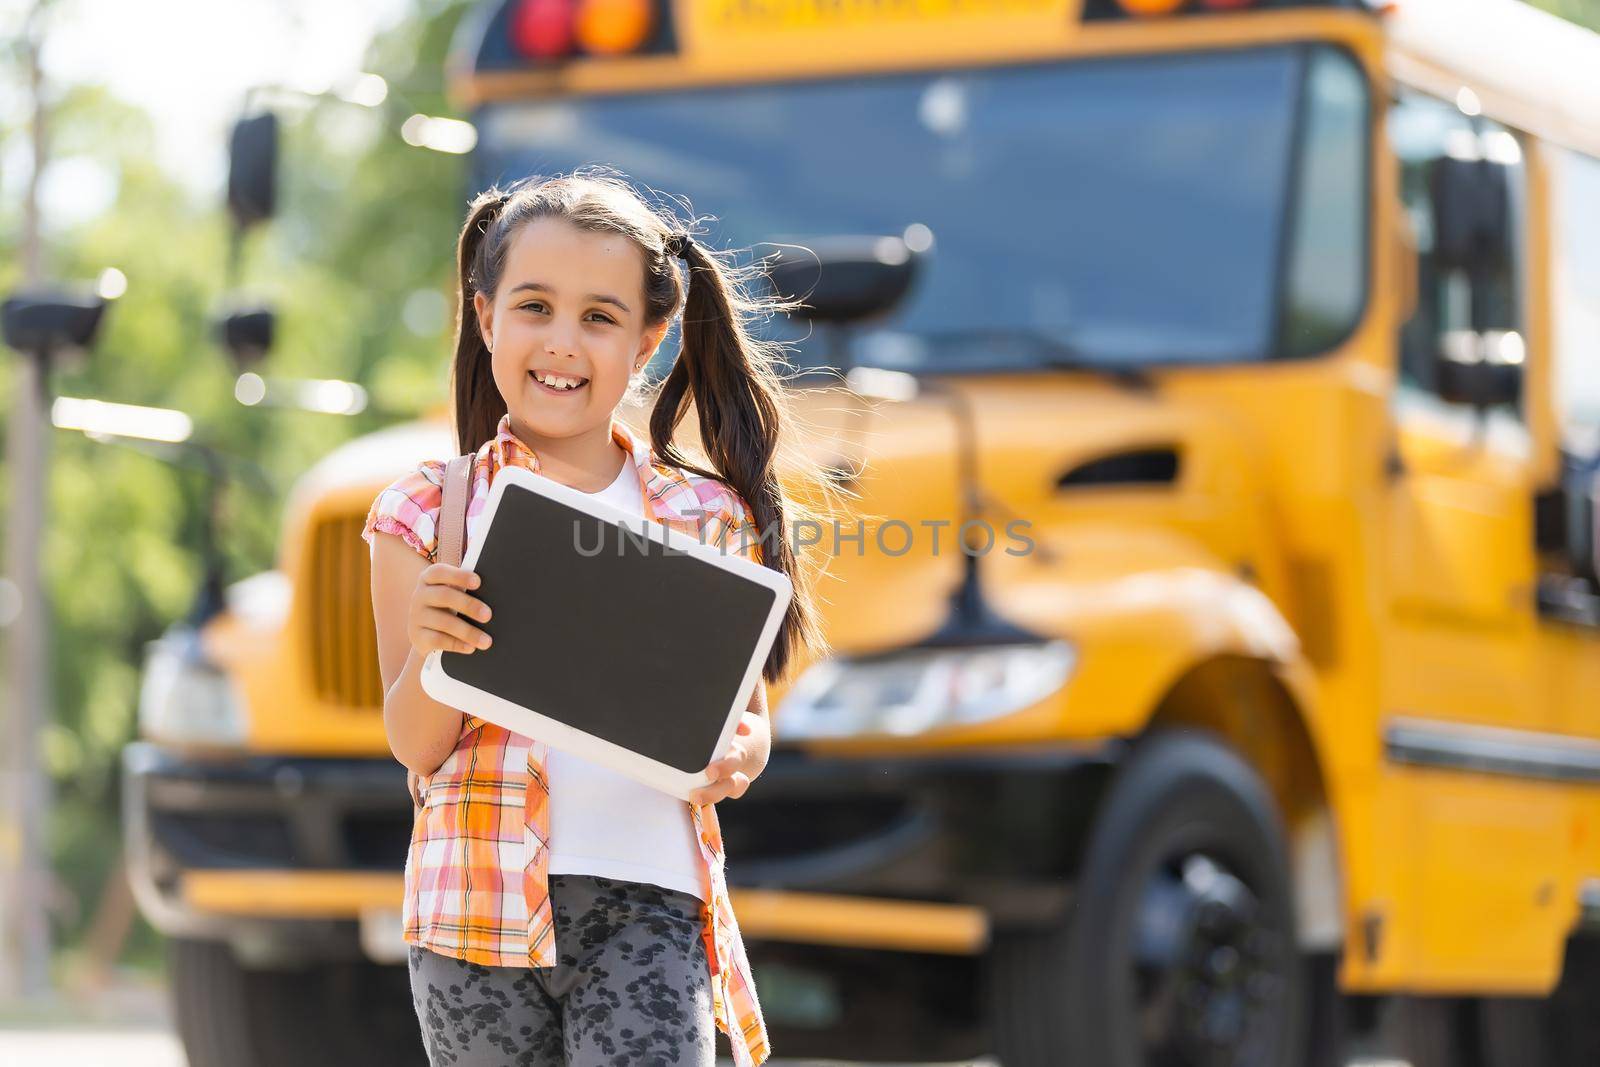 Little girl standing by a big school bus door with her backpack.